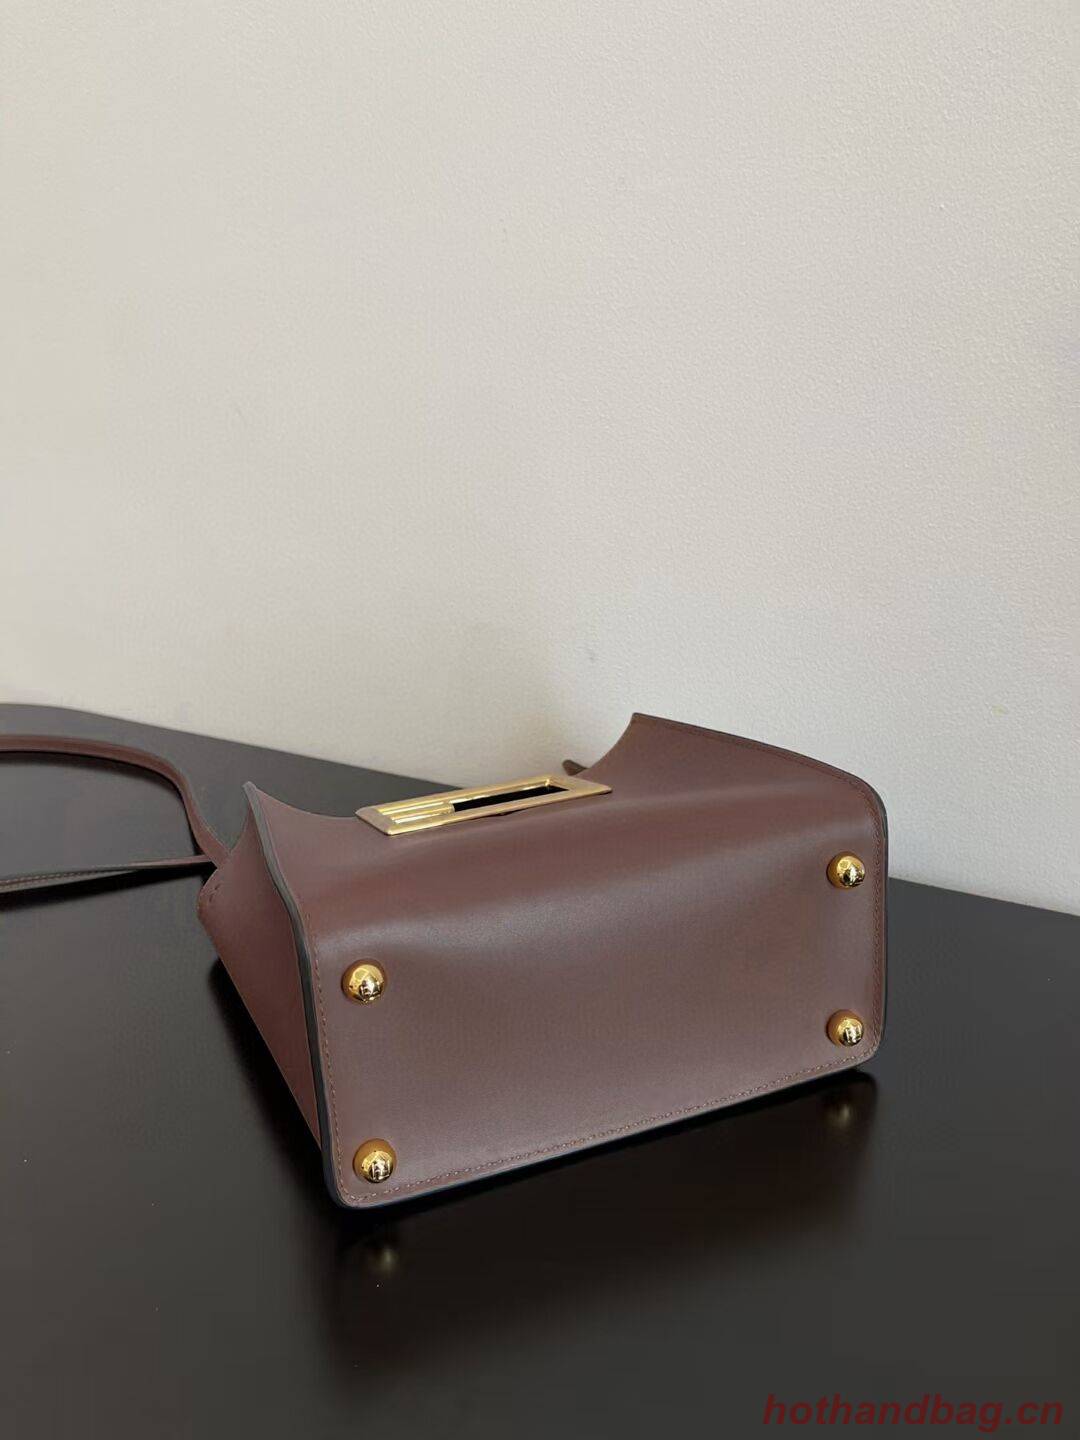 FENDI WAY small leather bag 5FB6846 Dark brown